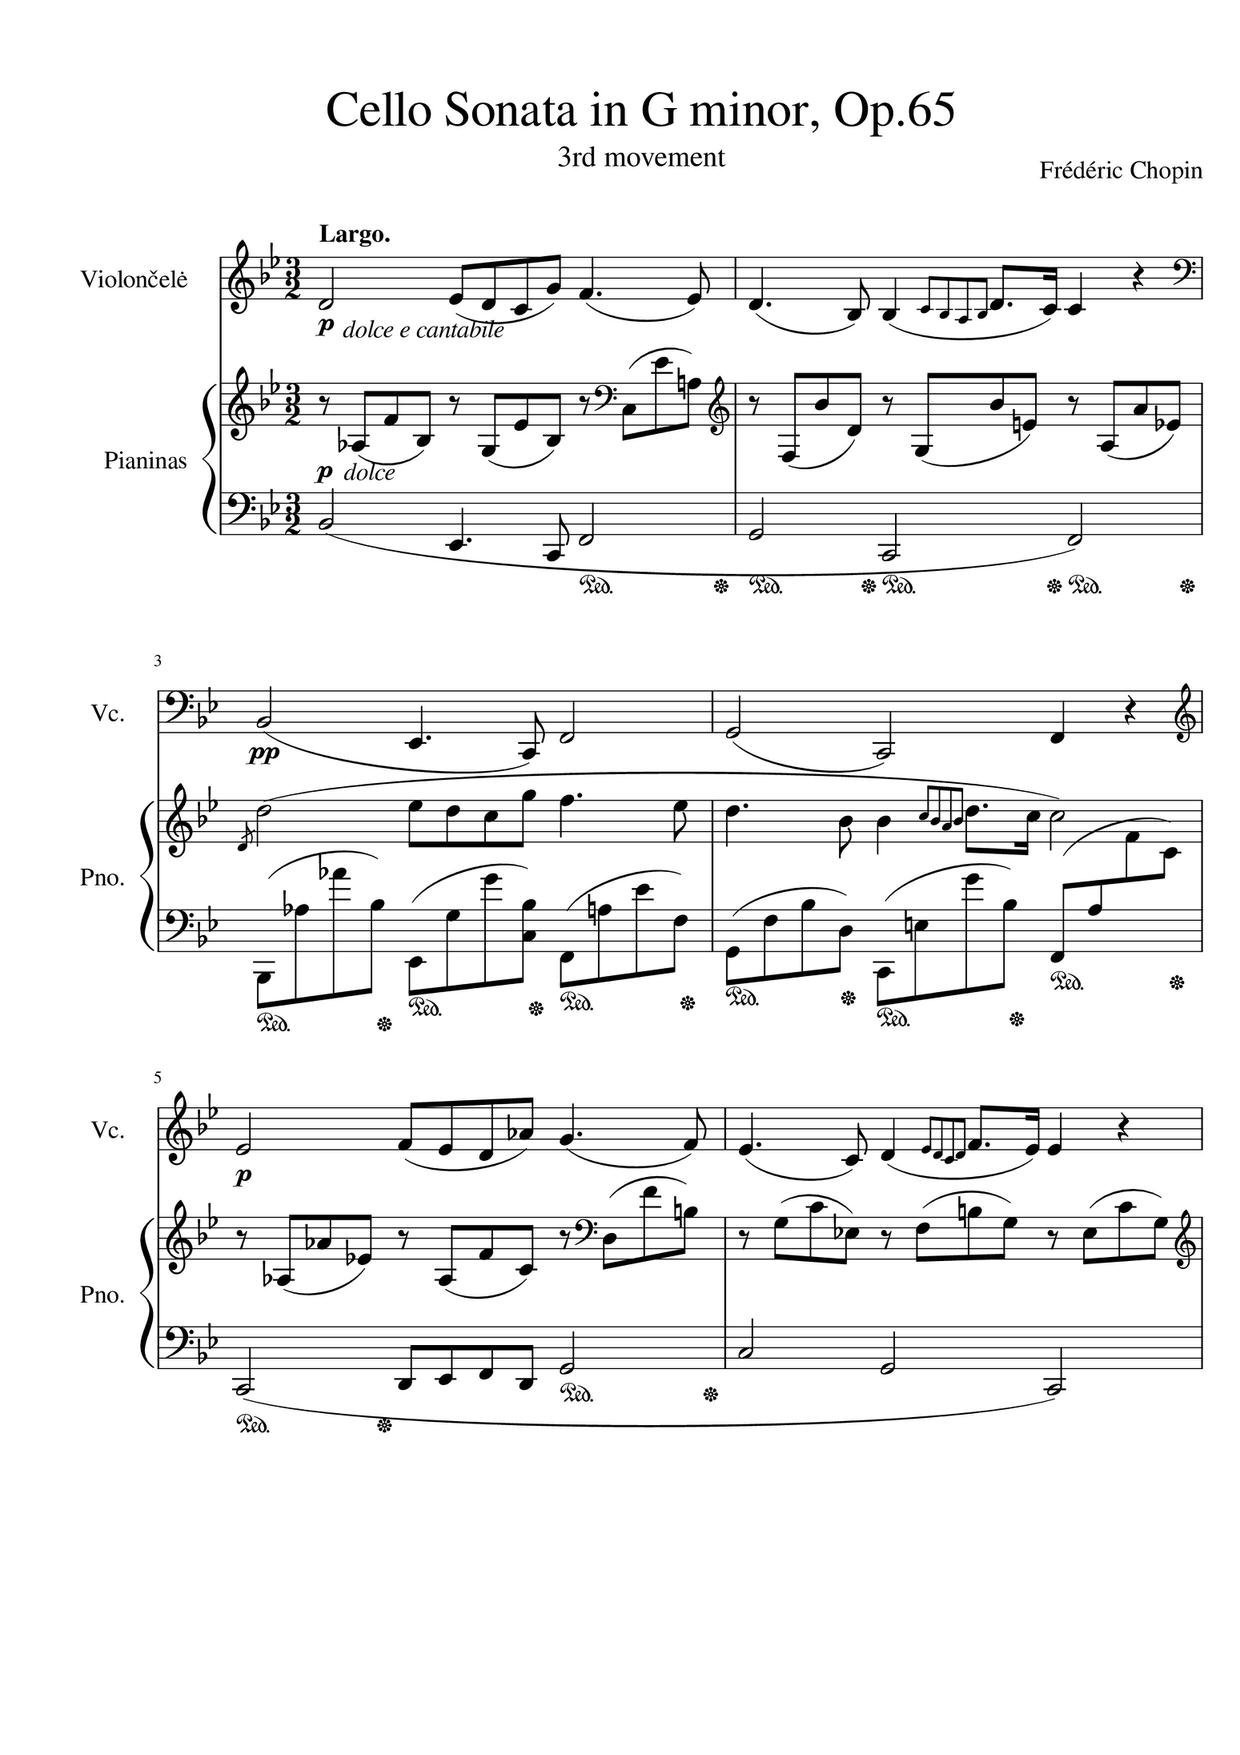 Cello Sonata in G Minor, Op. 65: III. Largo Score